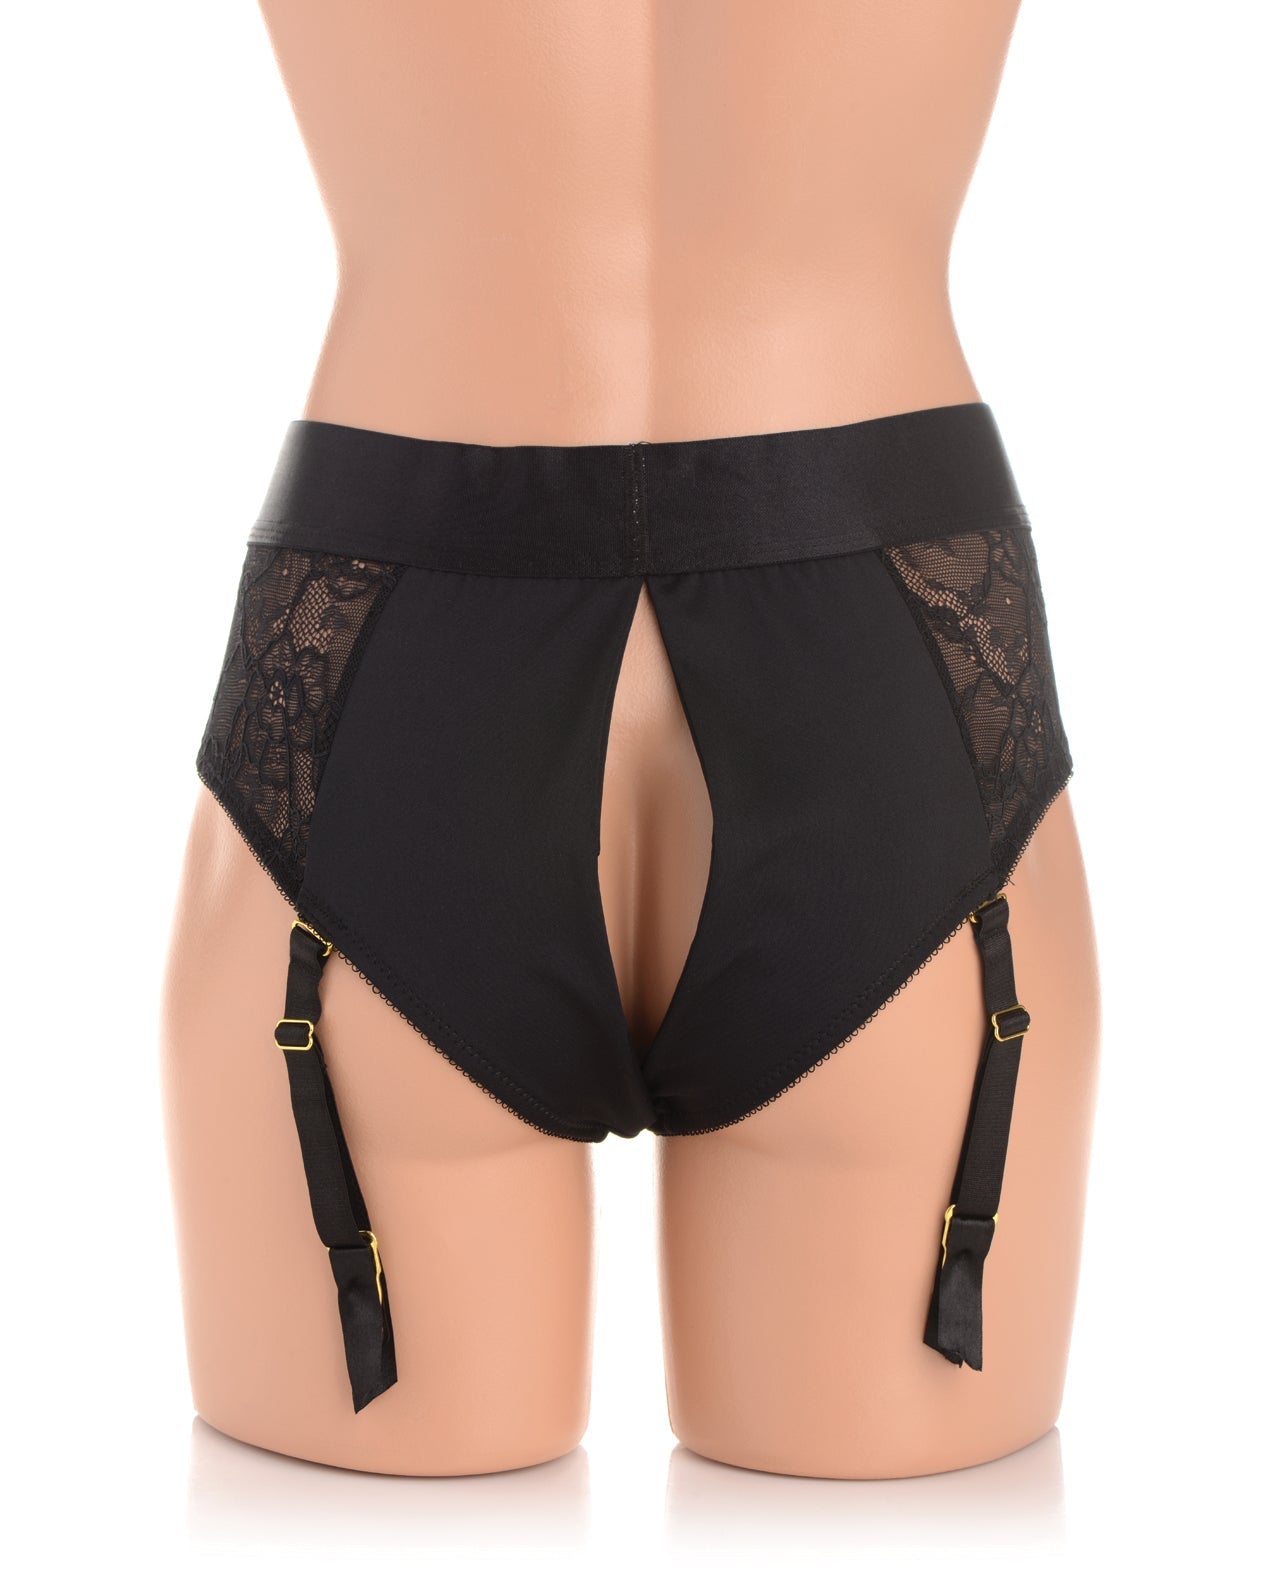 Strap U Laced Seductress Lace Crotchless Panty Harness w/Garter Straps - S/M Black